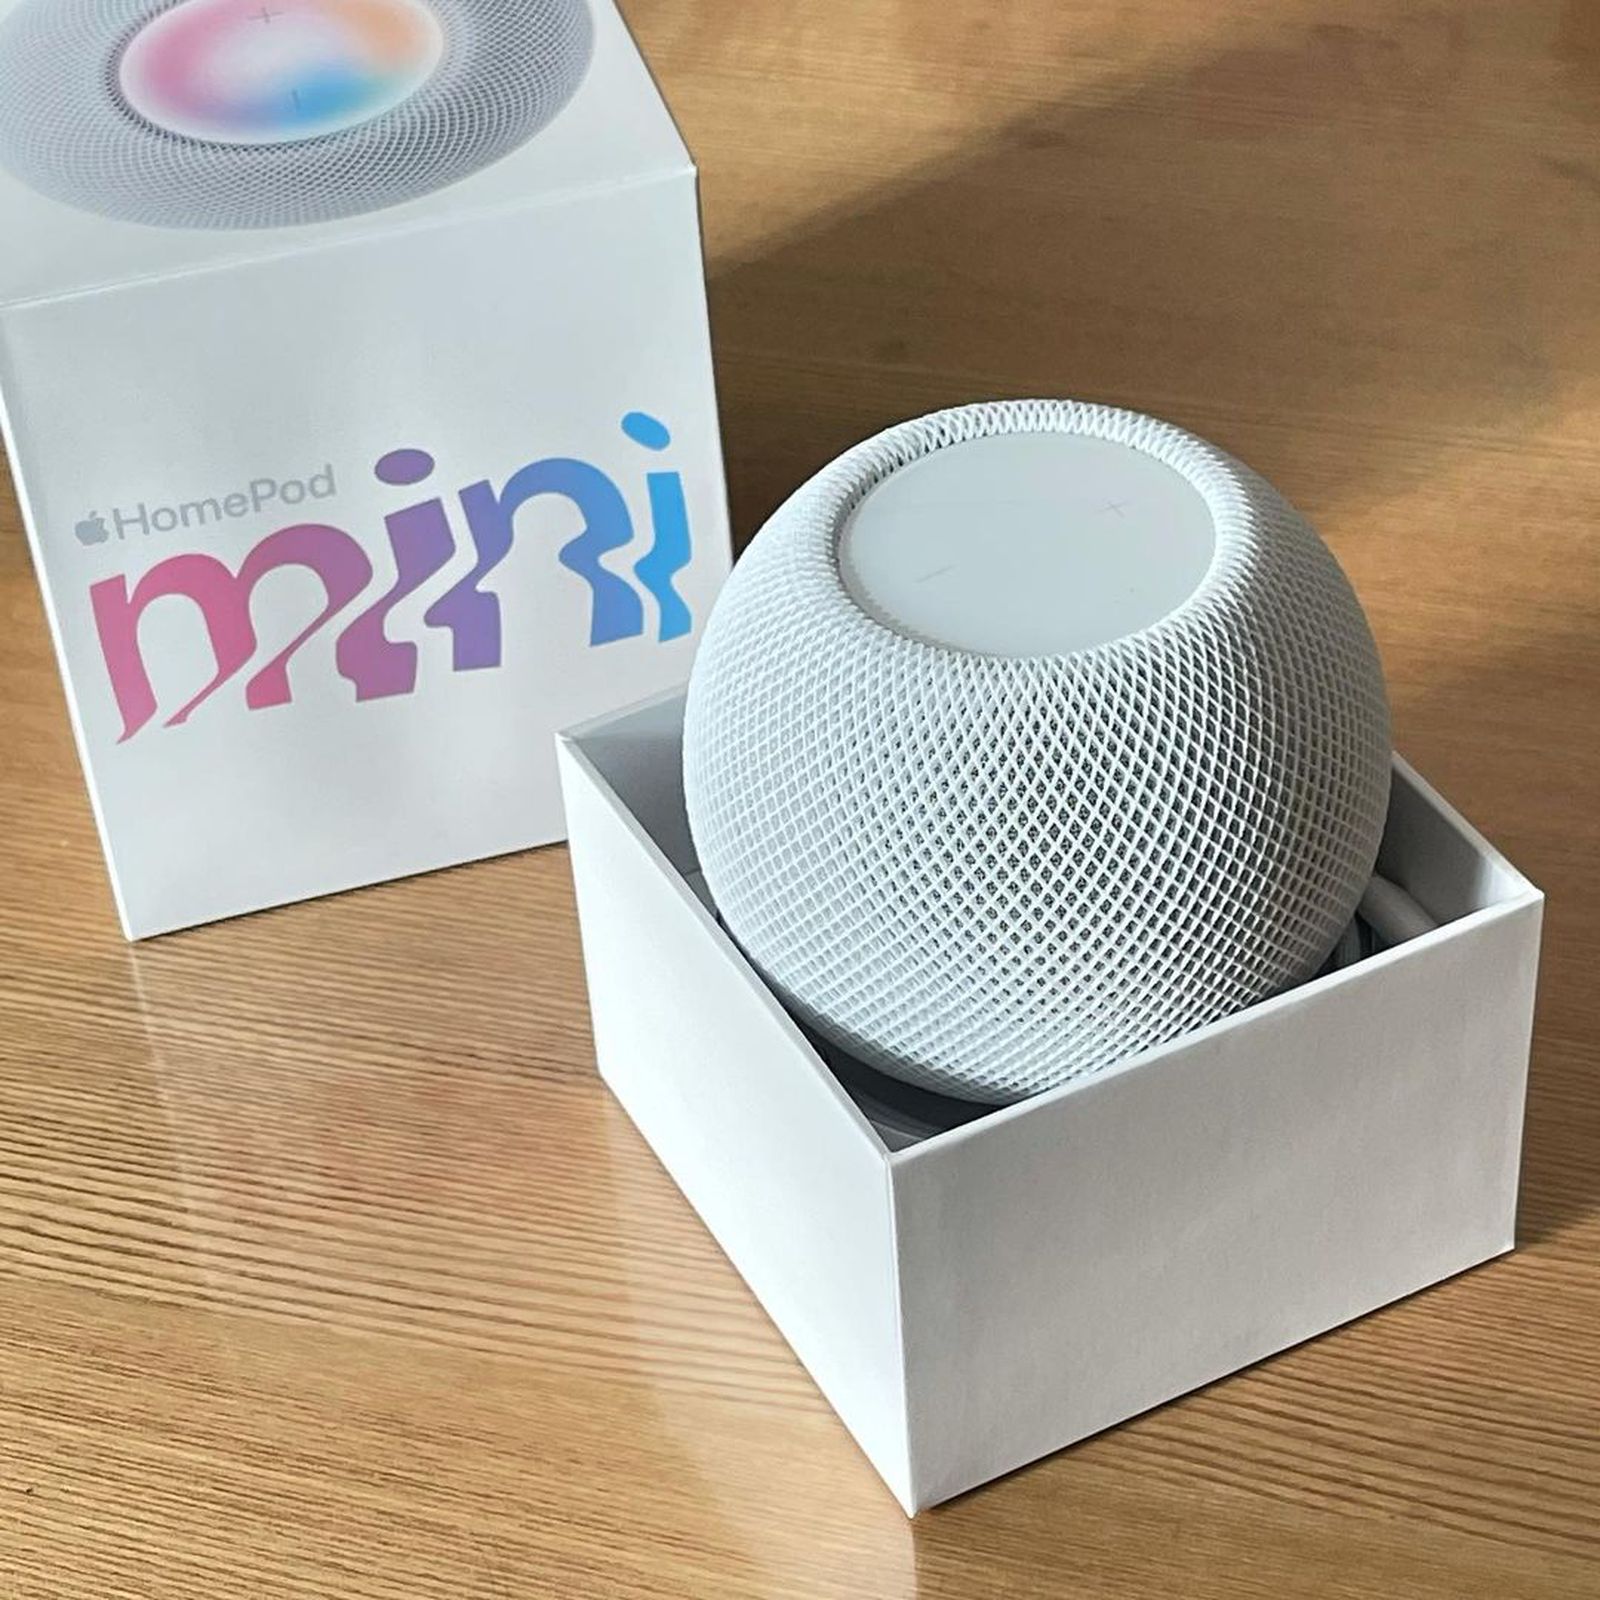 HomePod Mini Begins Arriving to Customers - MacRumors